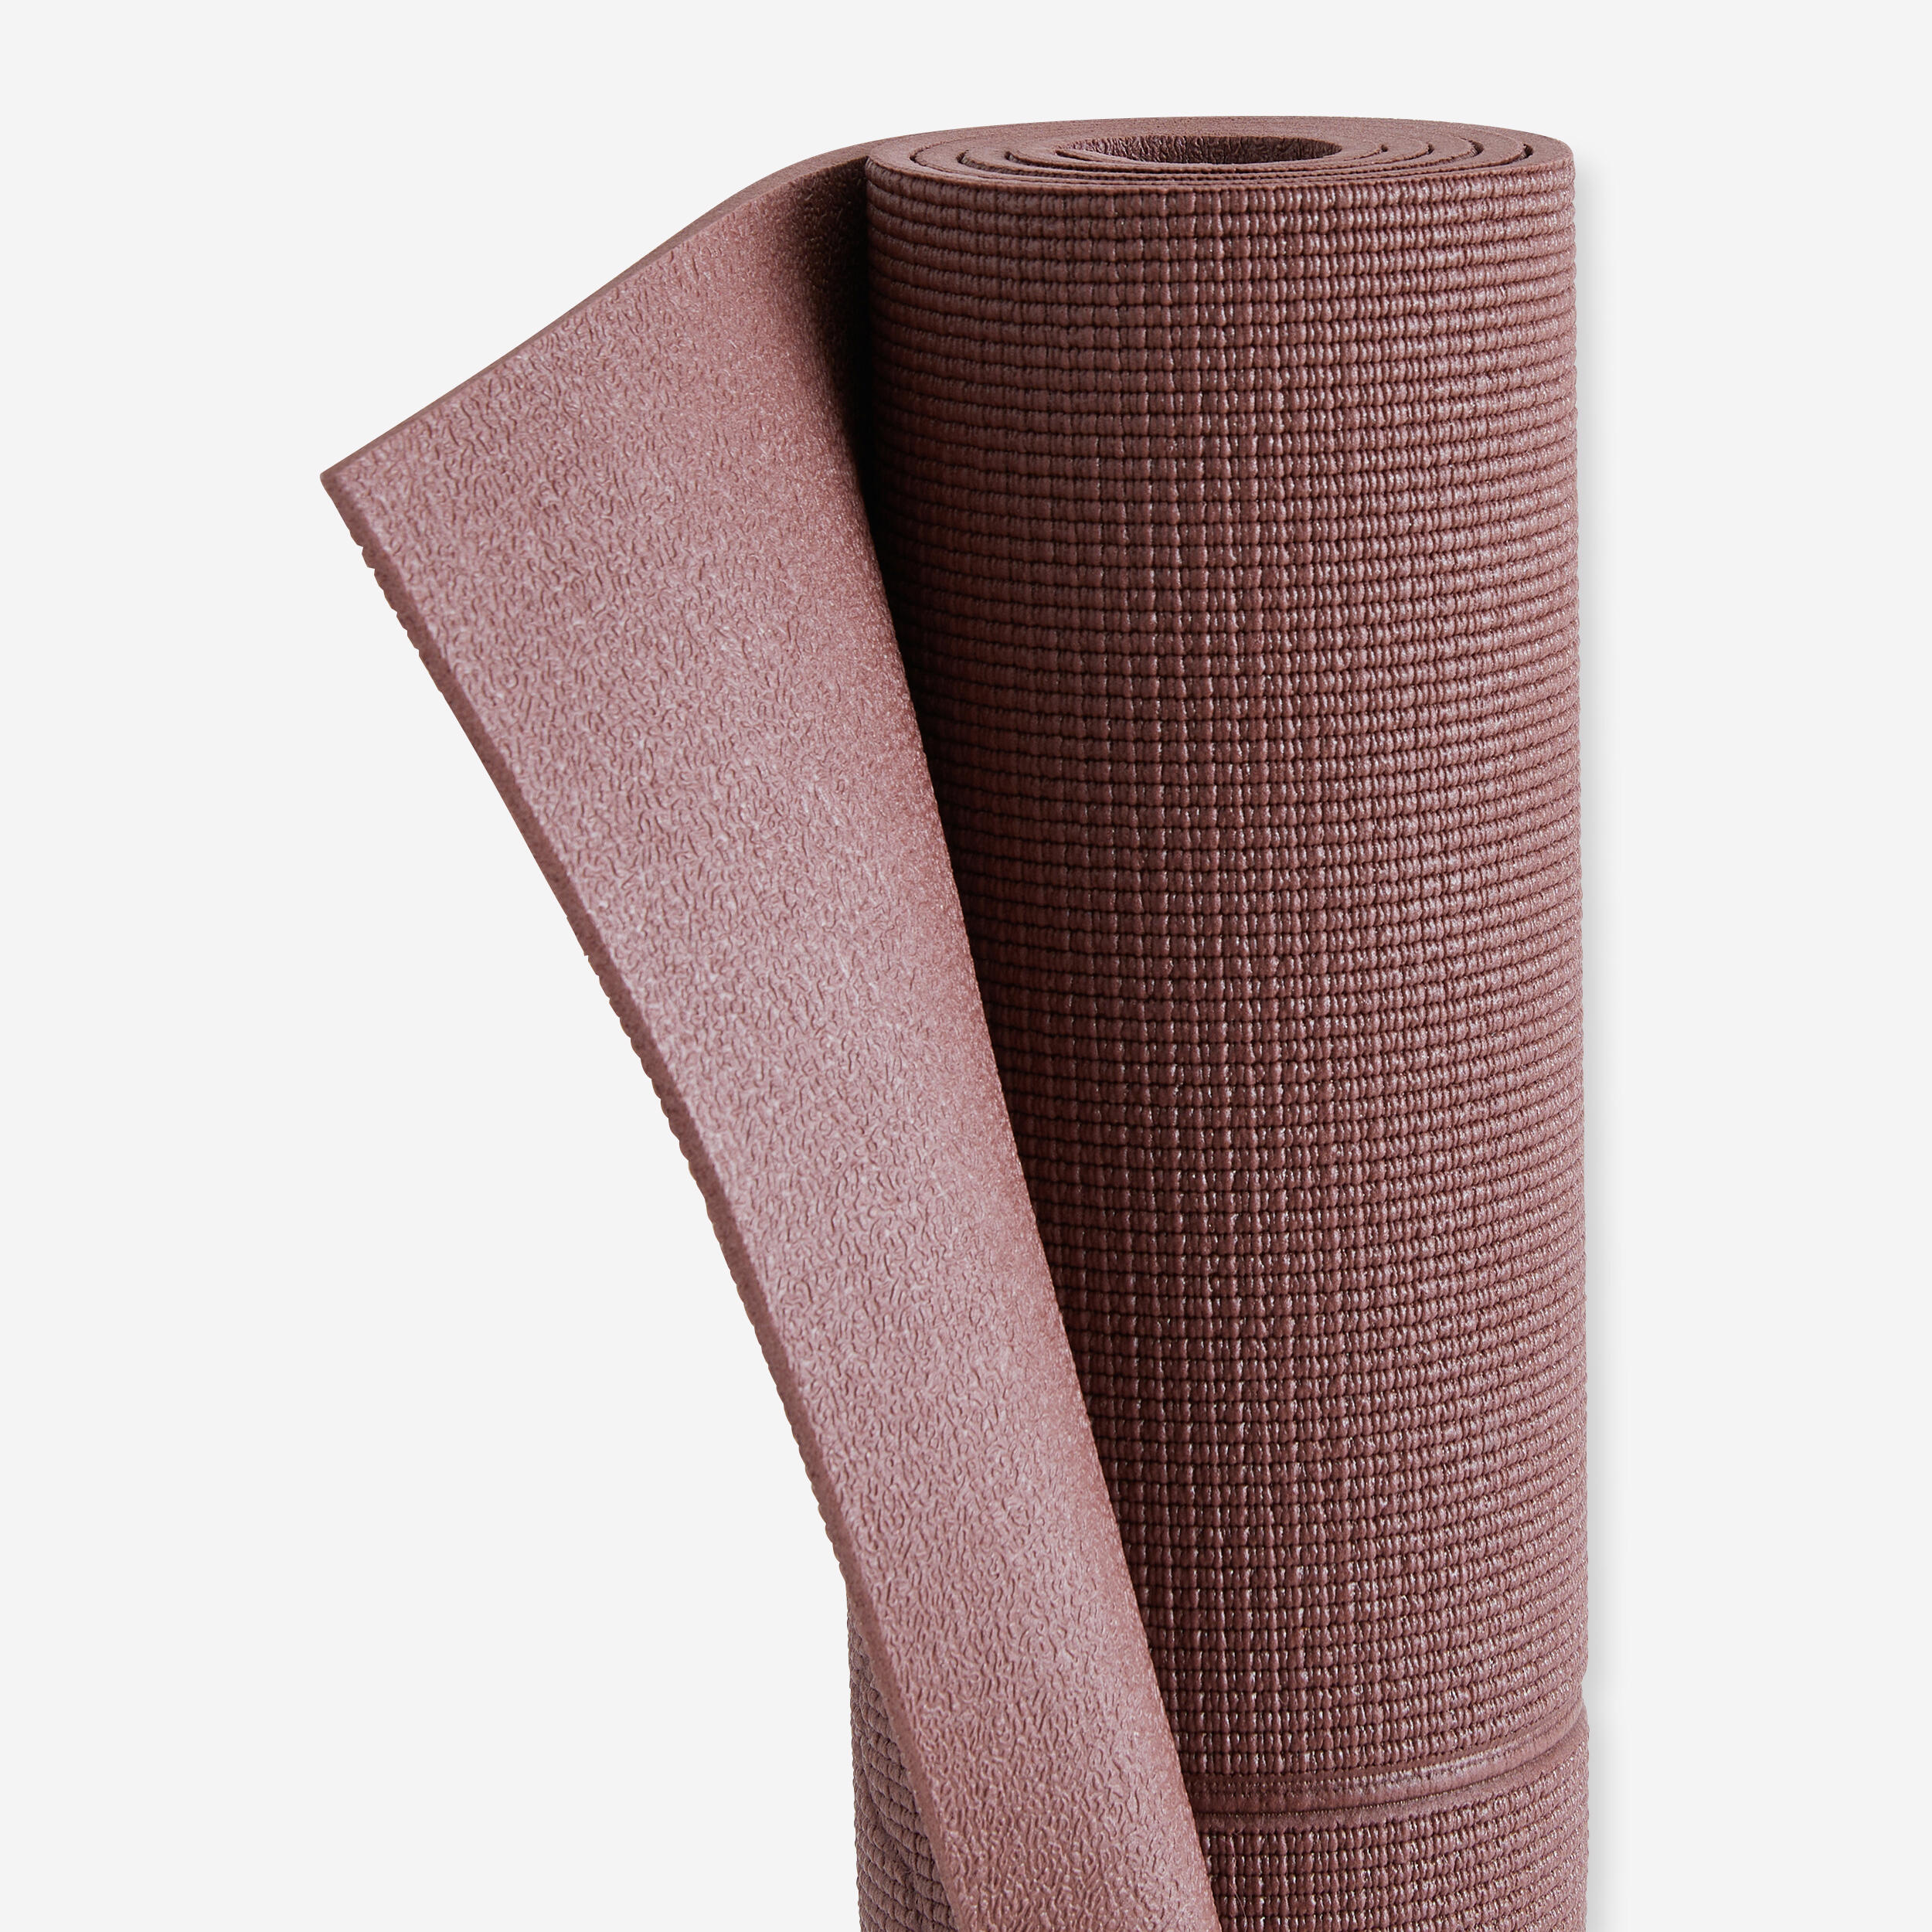 Gentle Yoga Comfort Mat 173 cm ⨯ 61 cm ⨯ 8 mm - Mahogany 4/4